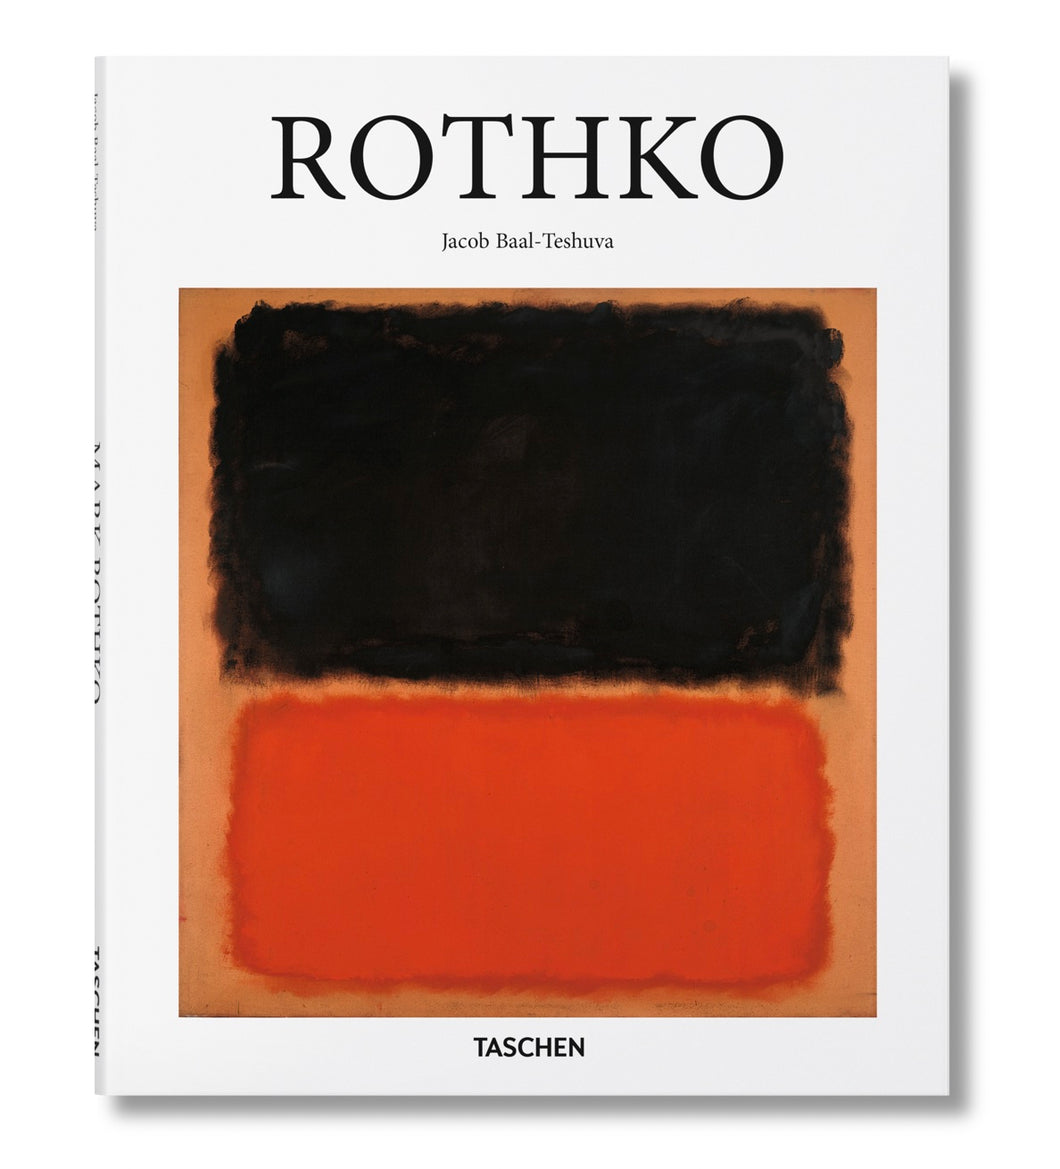 Rothko by Jacob Baal-Teshuva, Tashen Art-Book